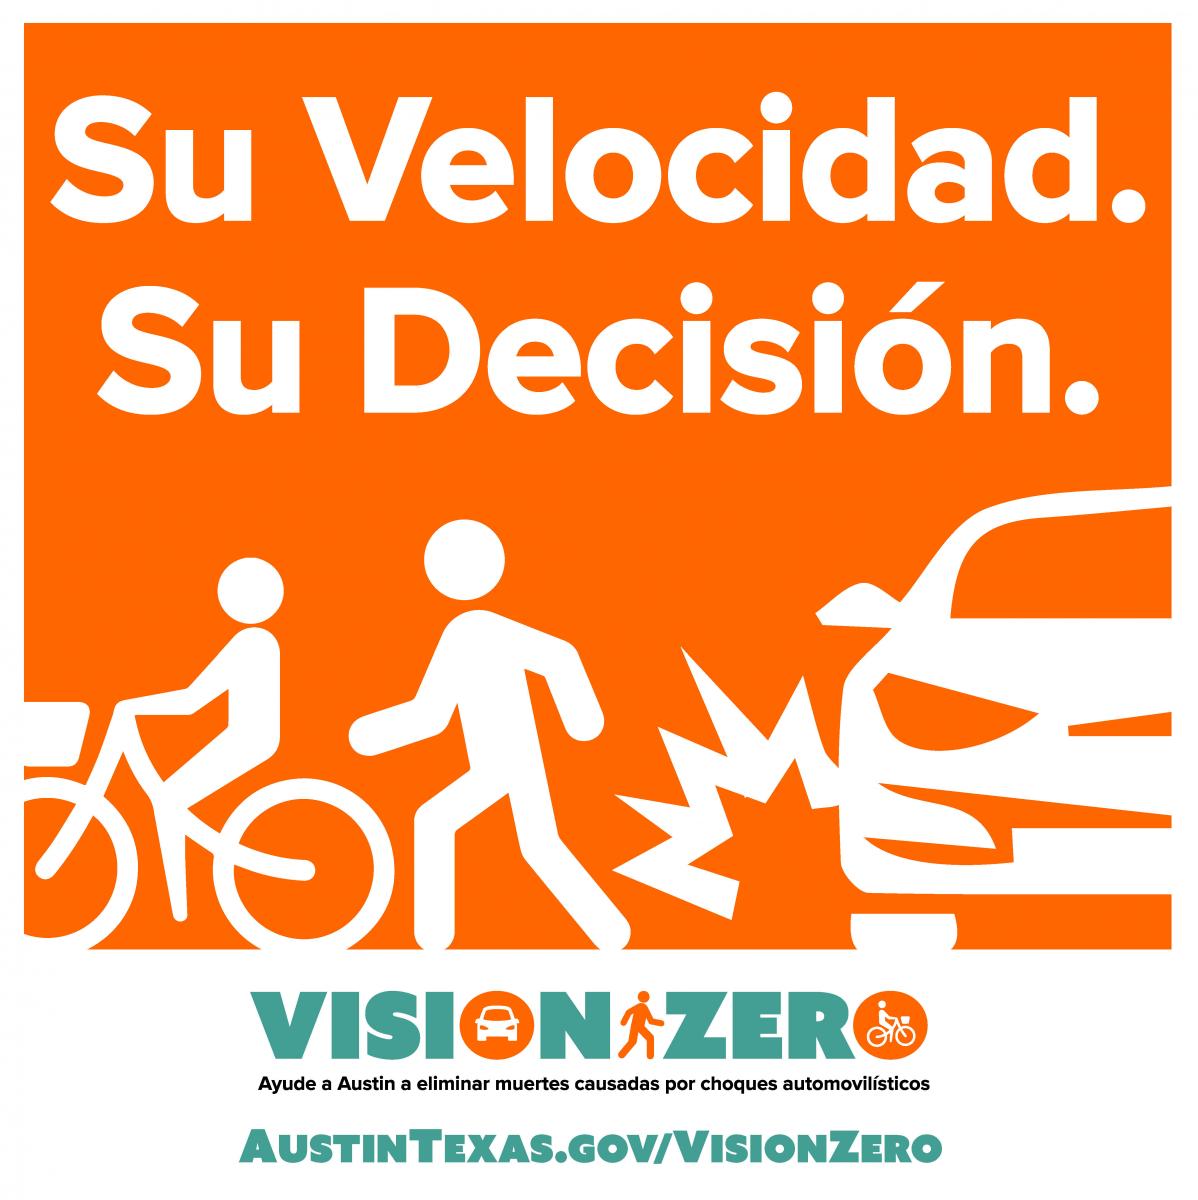 Se velocidad. Su decision. Vision Zero. Ayude a Austin a eliminar muertes causadas por choques automovilisticos. AustinTexas.gov/VisionZero.